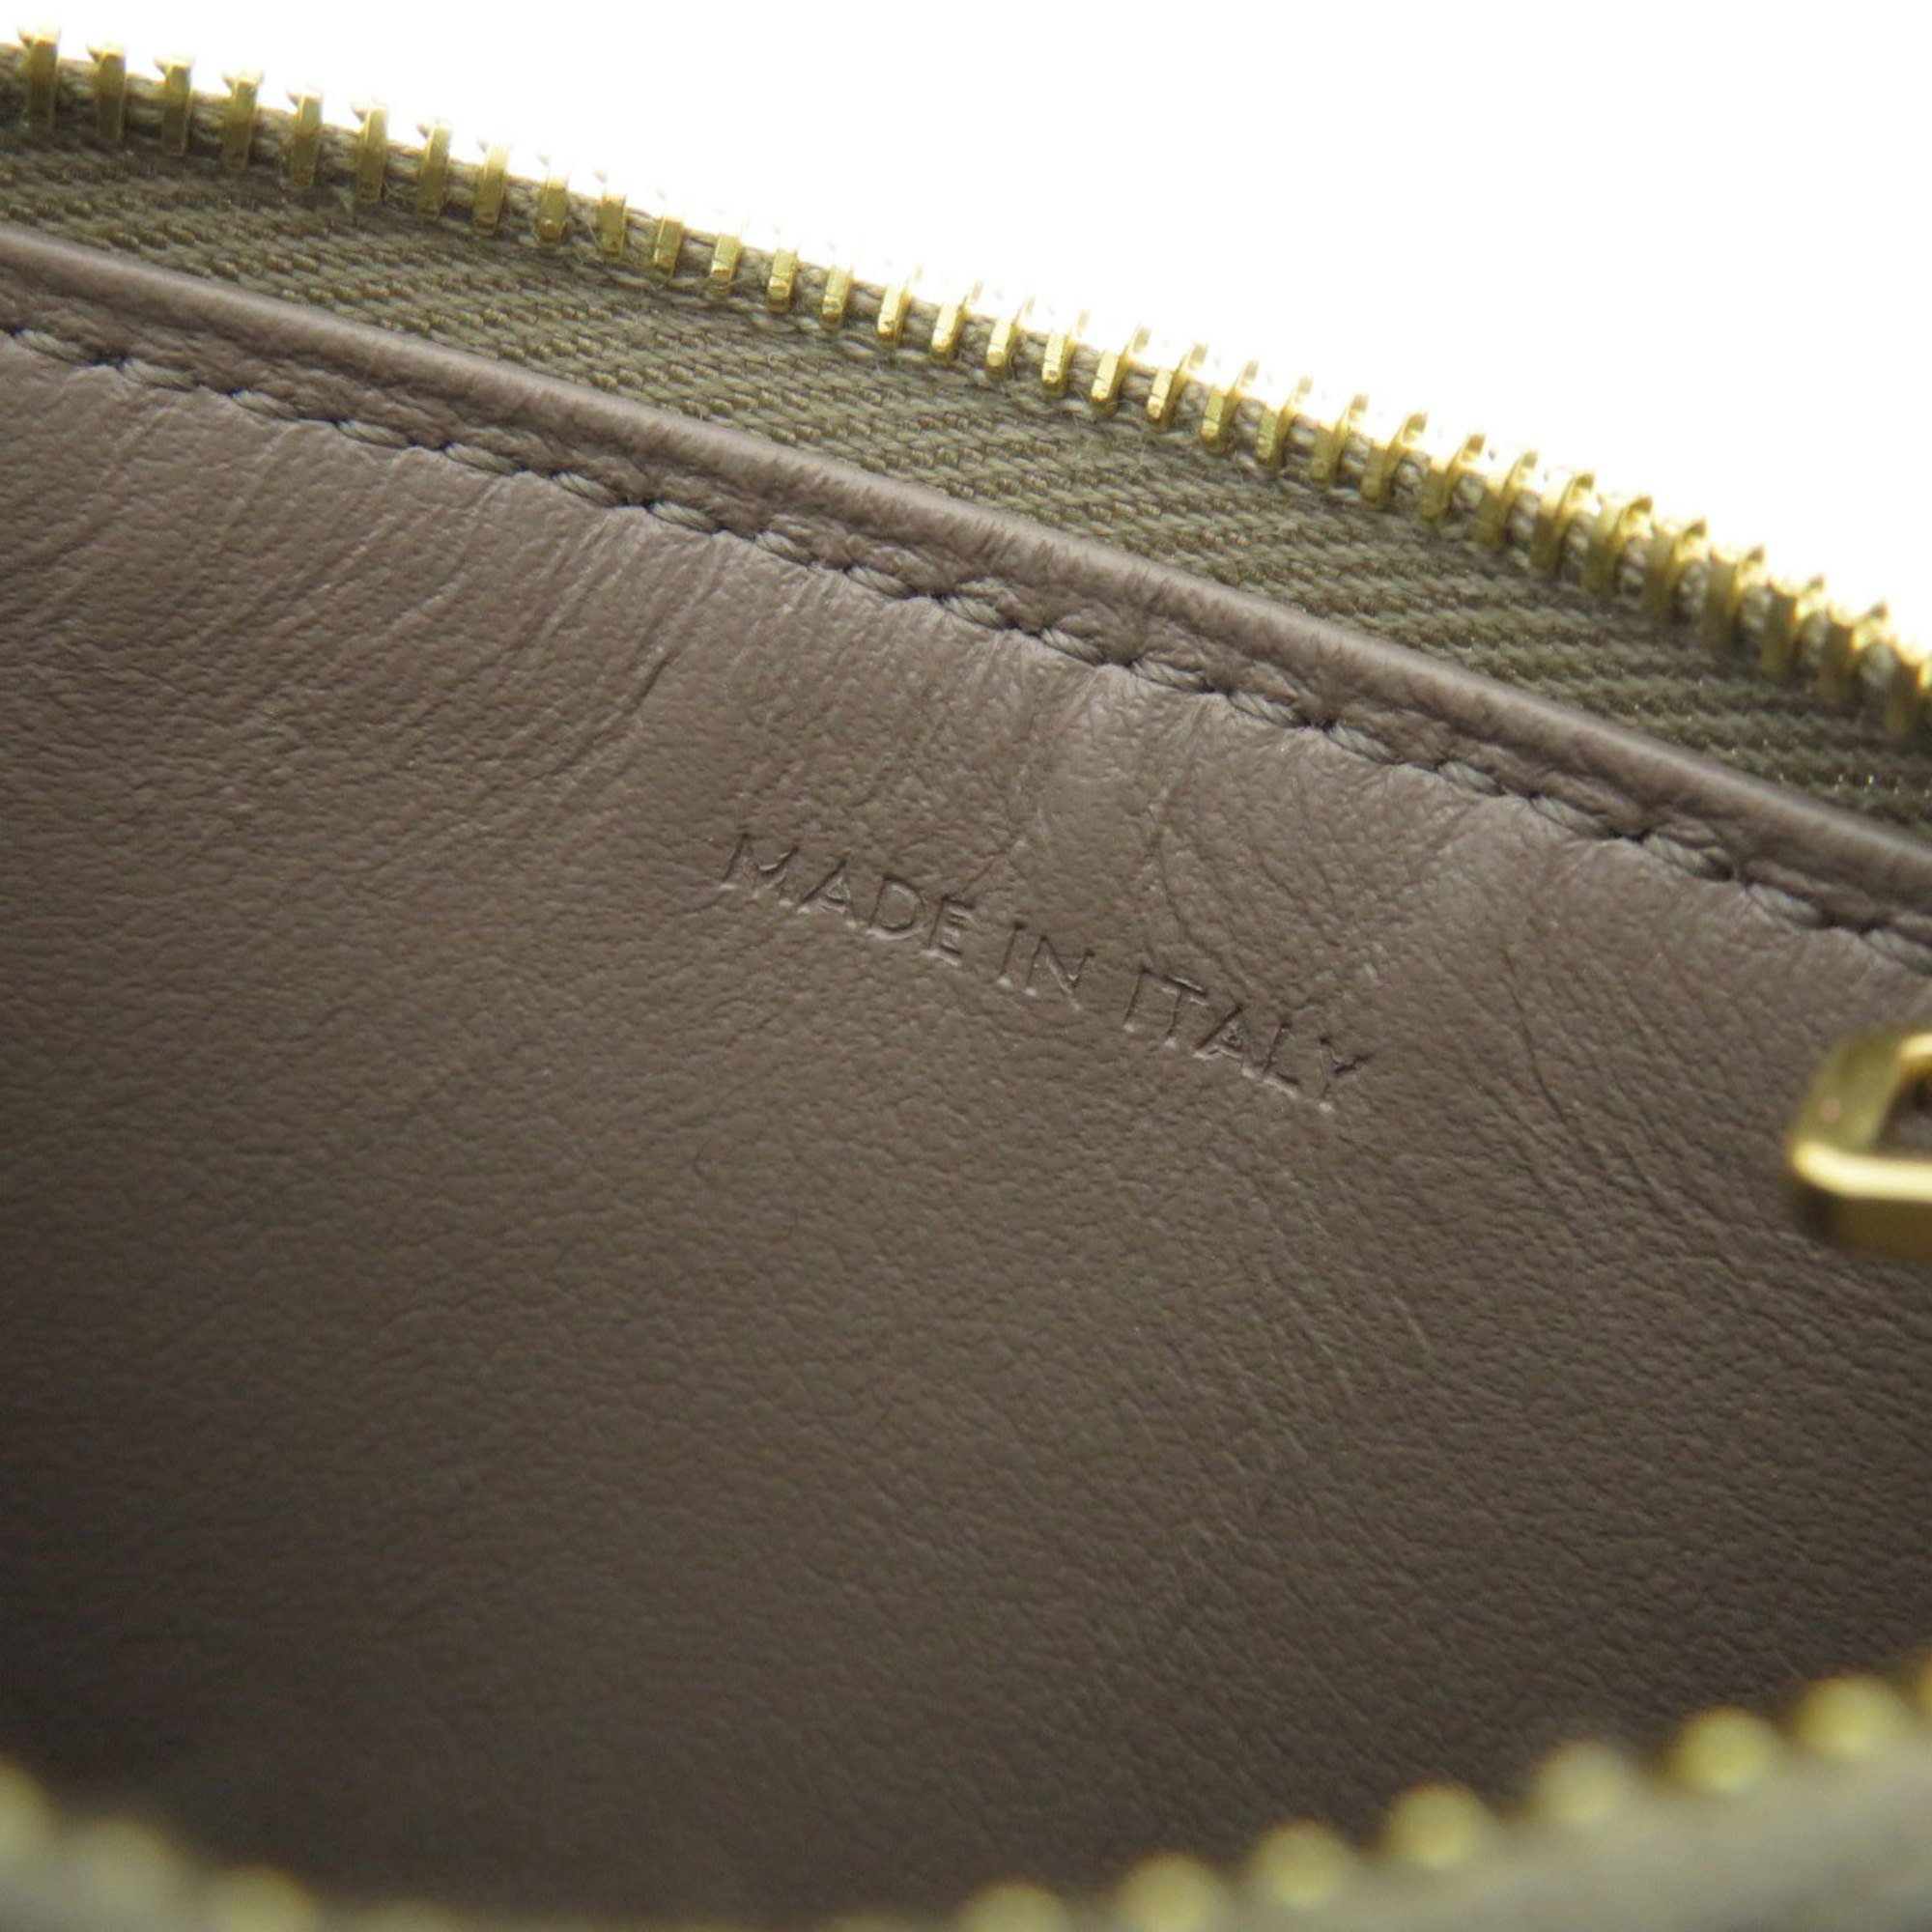 Celine motif coin case in calf leather for women CELINE